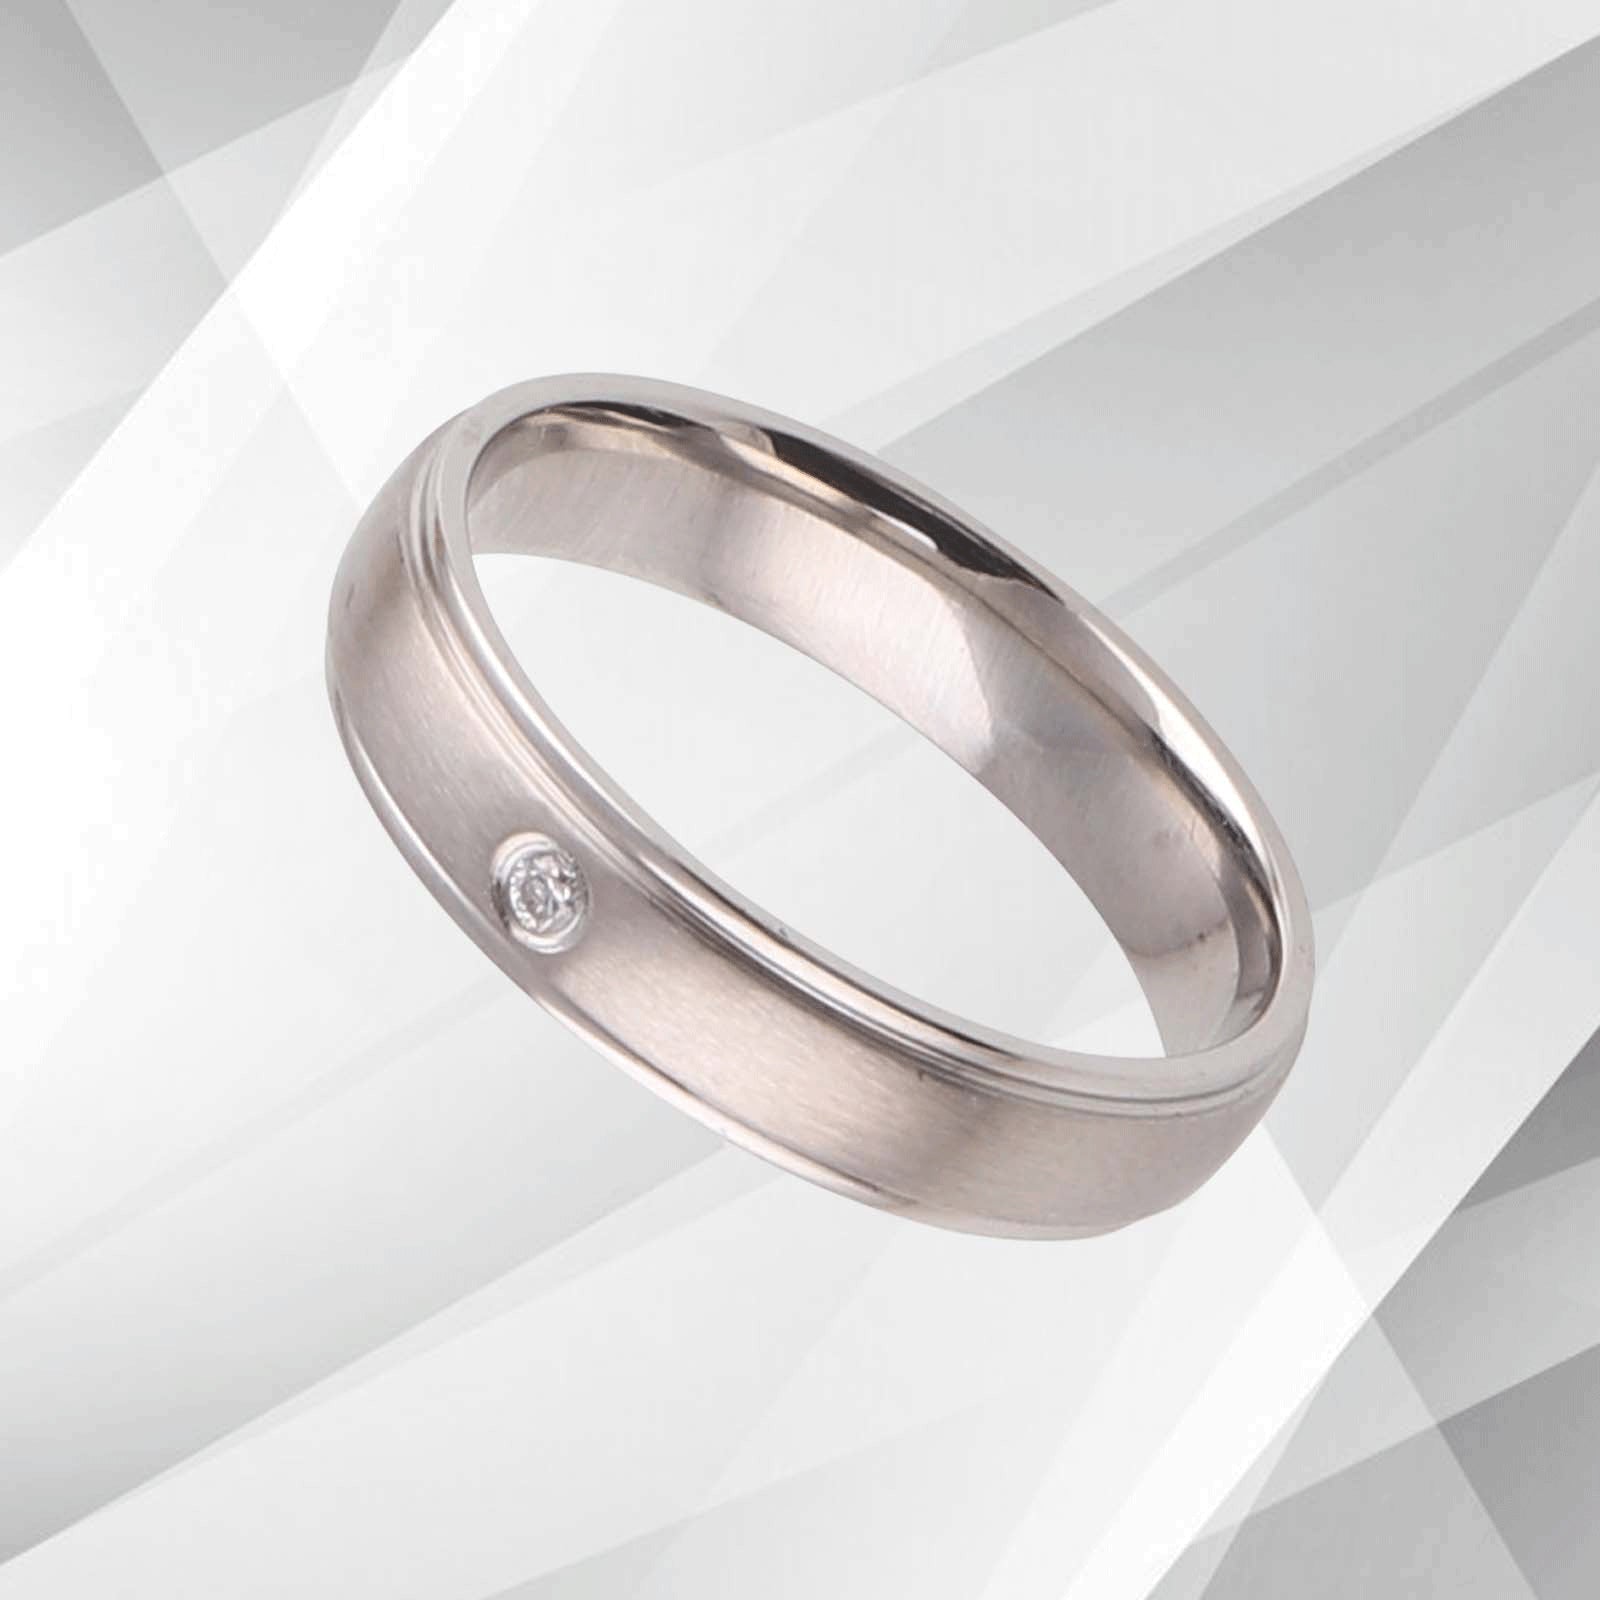 Gorgeous Sleek Titanium CZ Diamond Wedding Band Ring - 4mm Wide Matt Finish with 18Ct White Gold Inside - Women's Engagement Anniversary Gift - Jewelry & Watches - Bijou Her -  -  - 